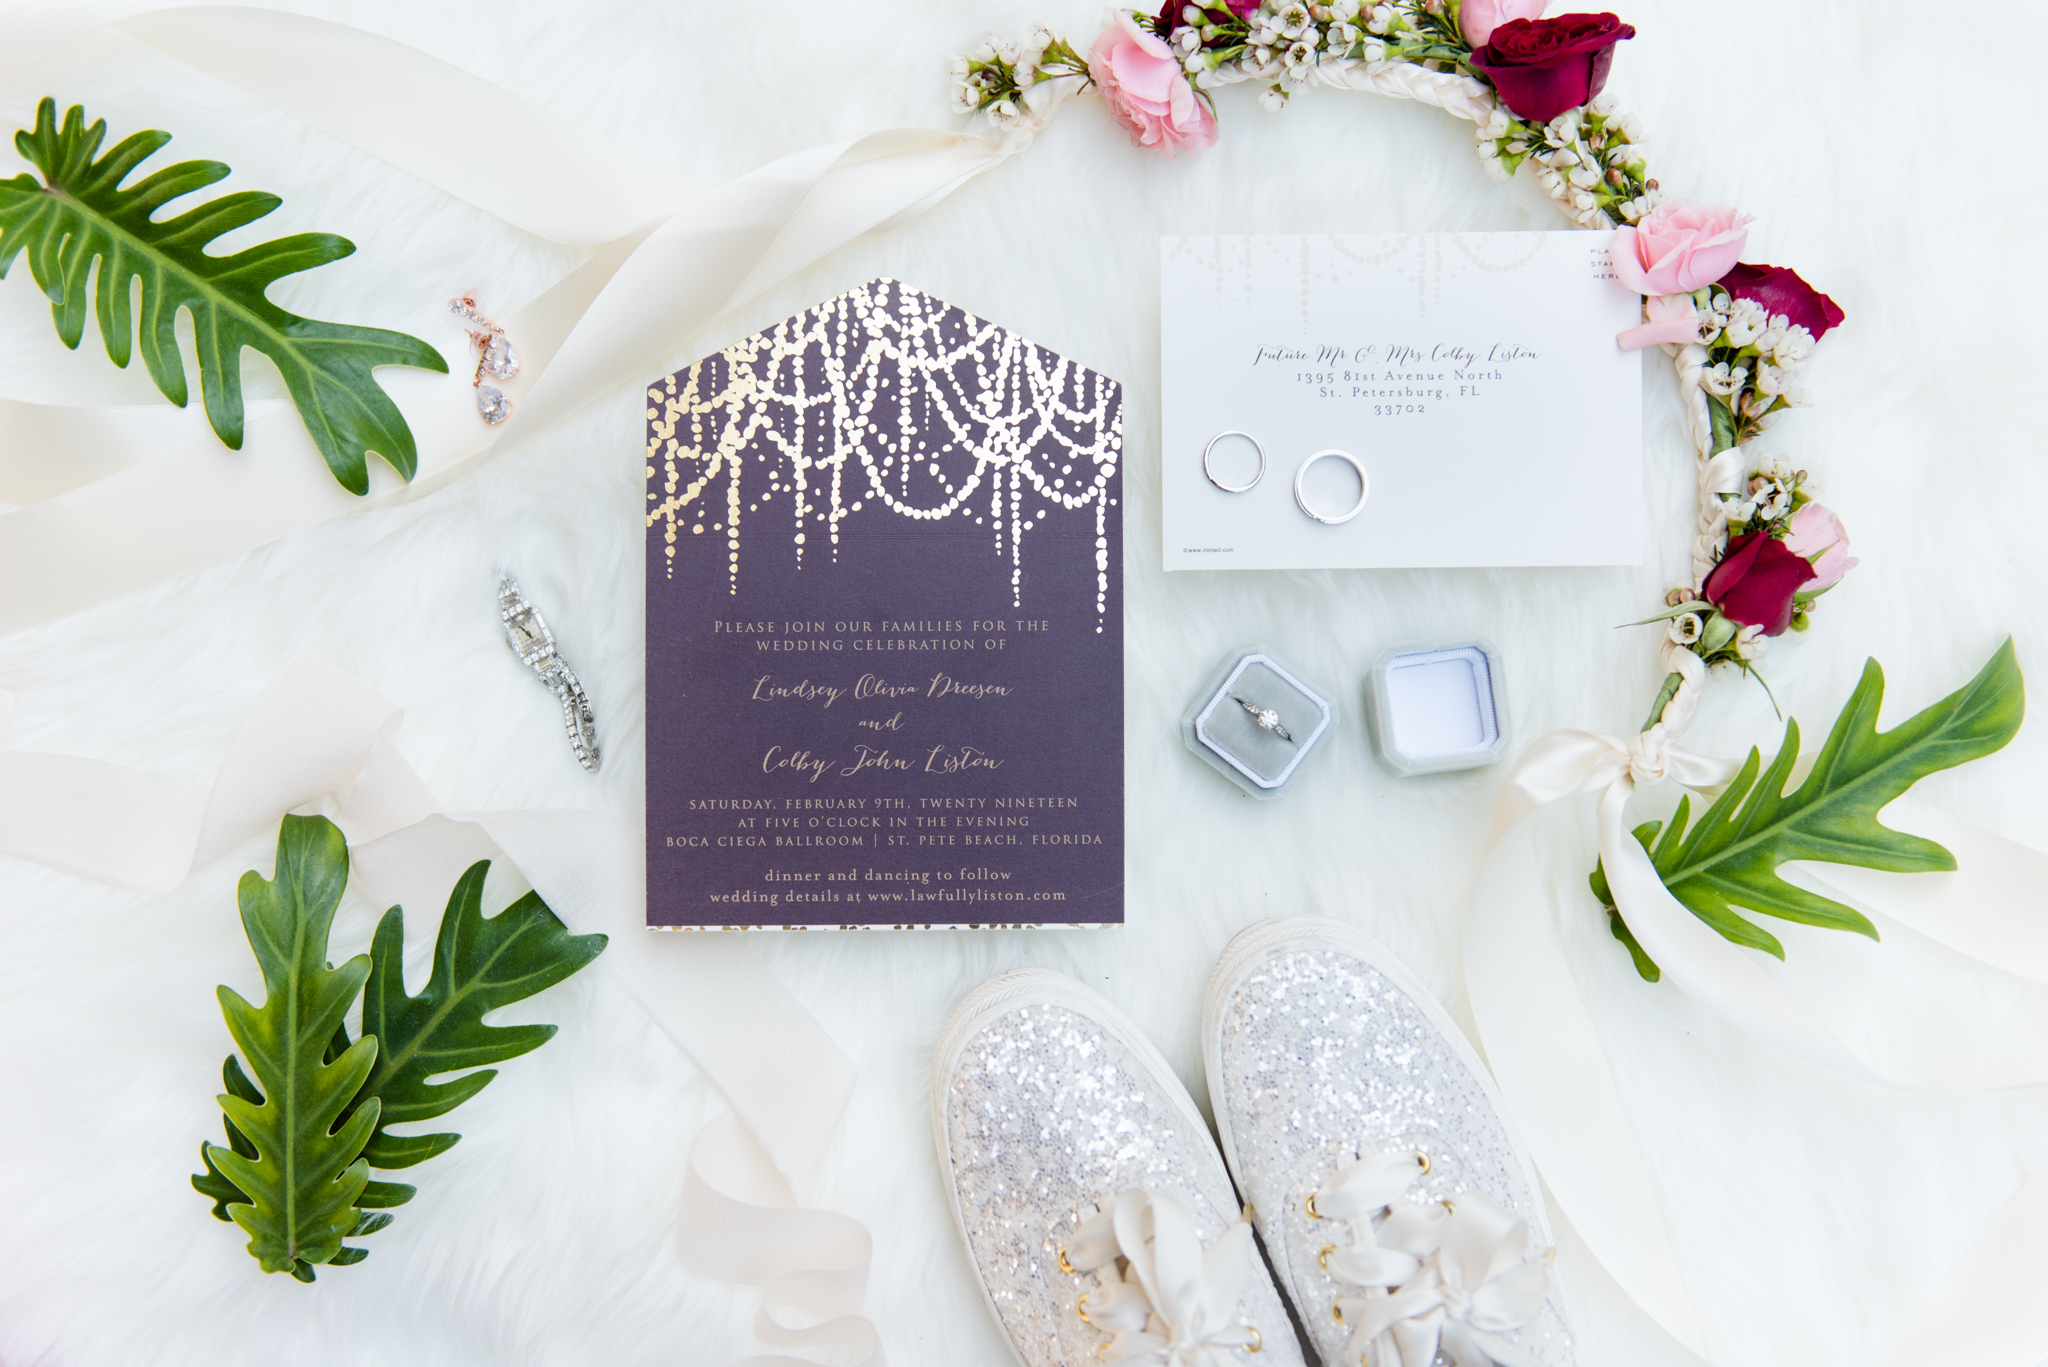 Wedding details arranged for photographs.